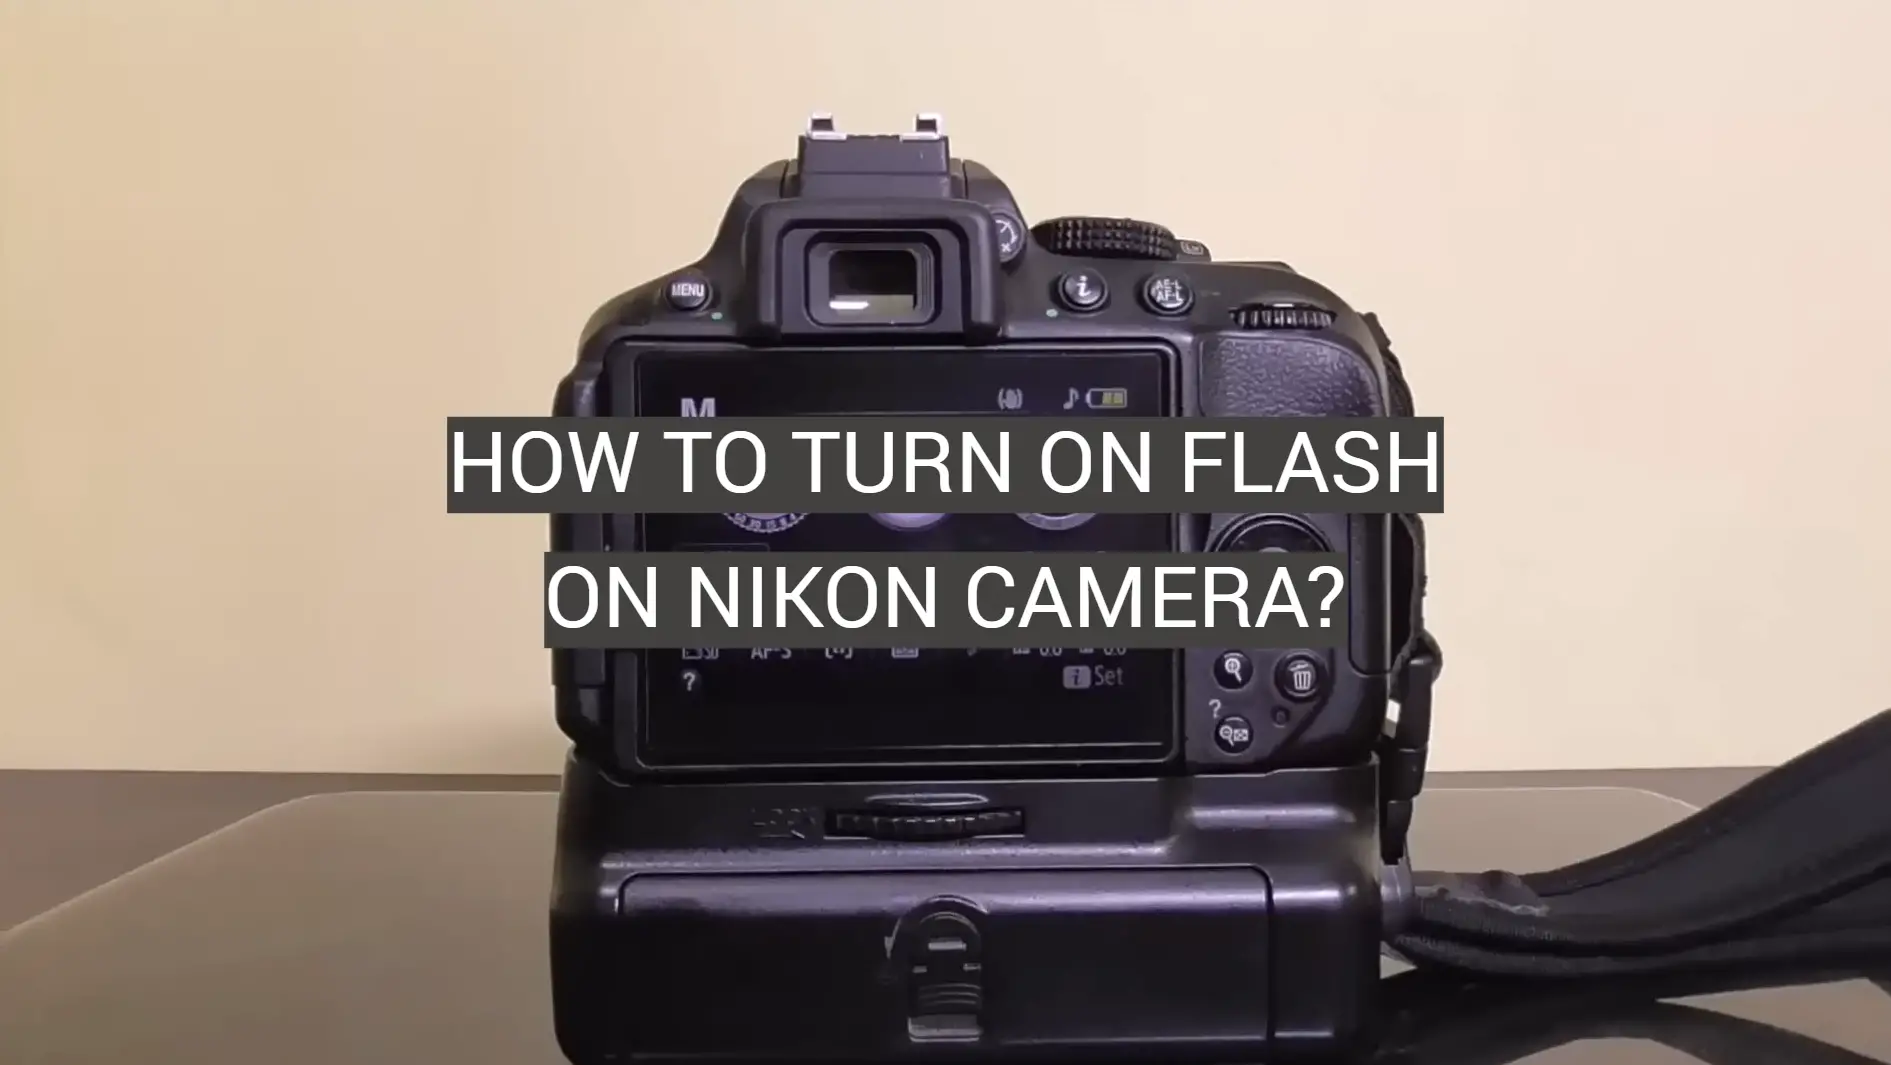 How to Turn On Flash on Nikon Camera?